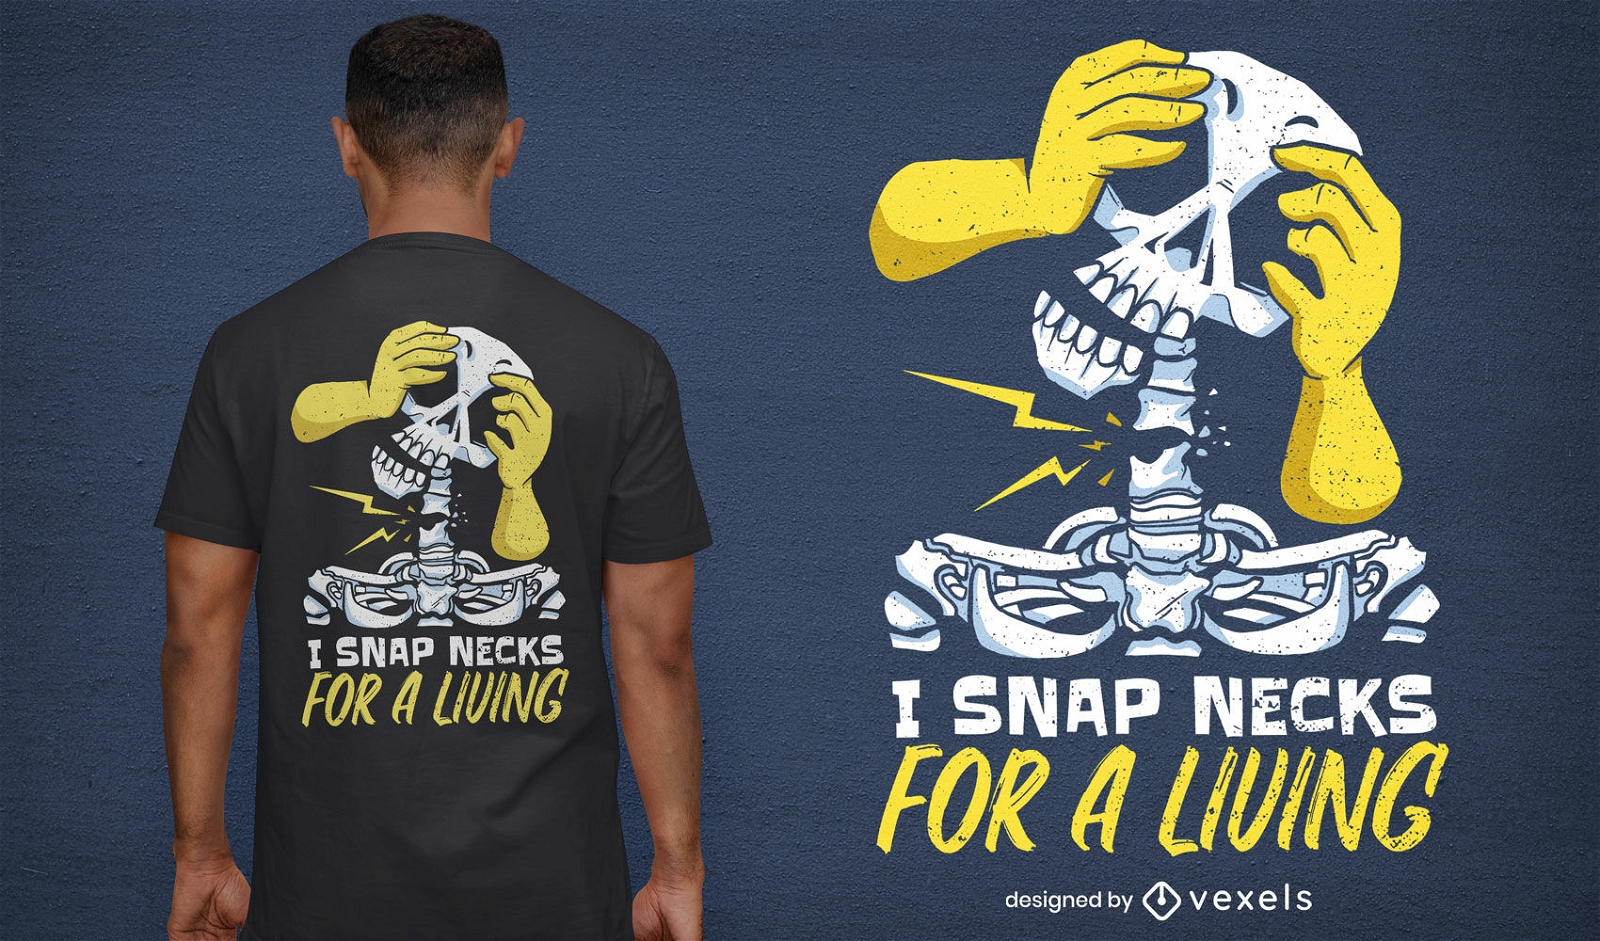 Skeleton chiropractic t-shirt desgin